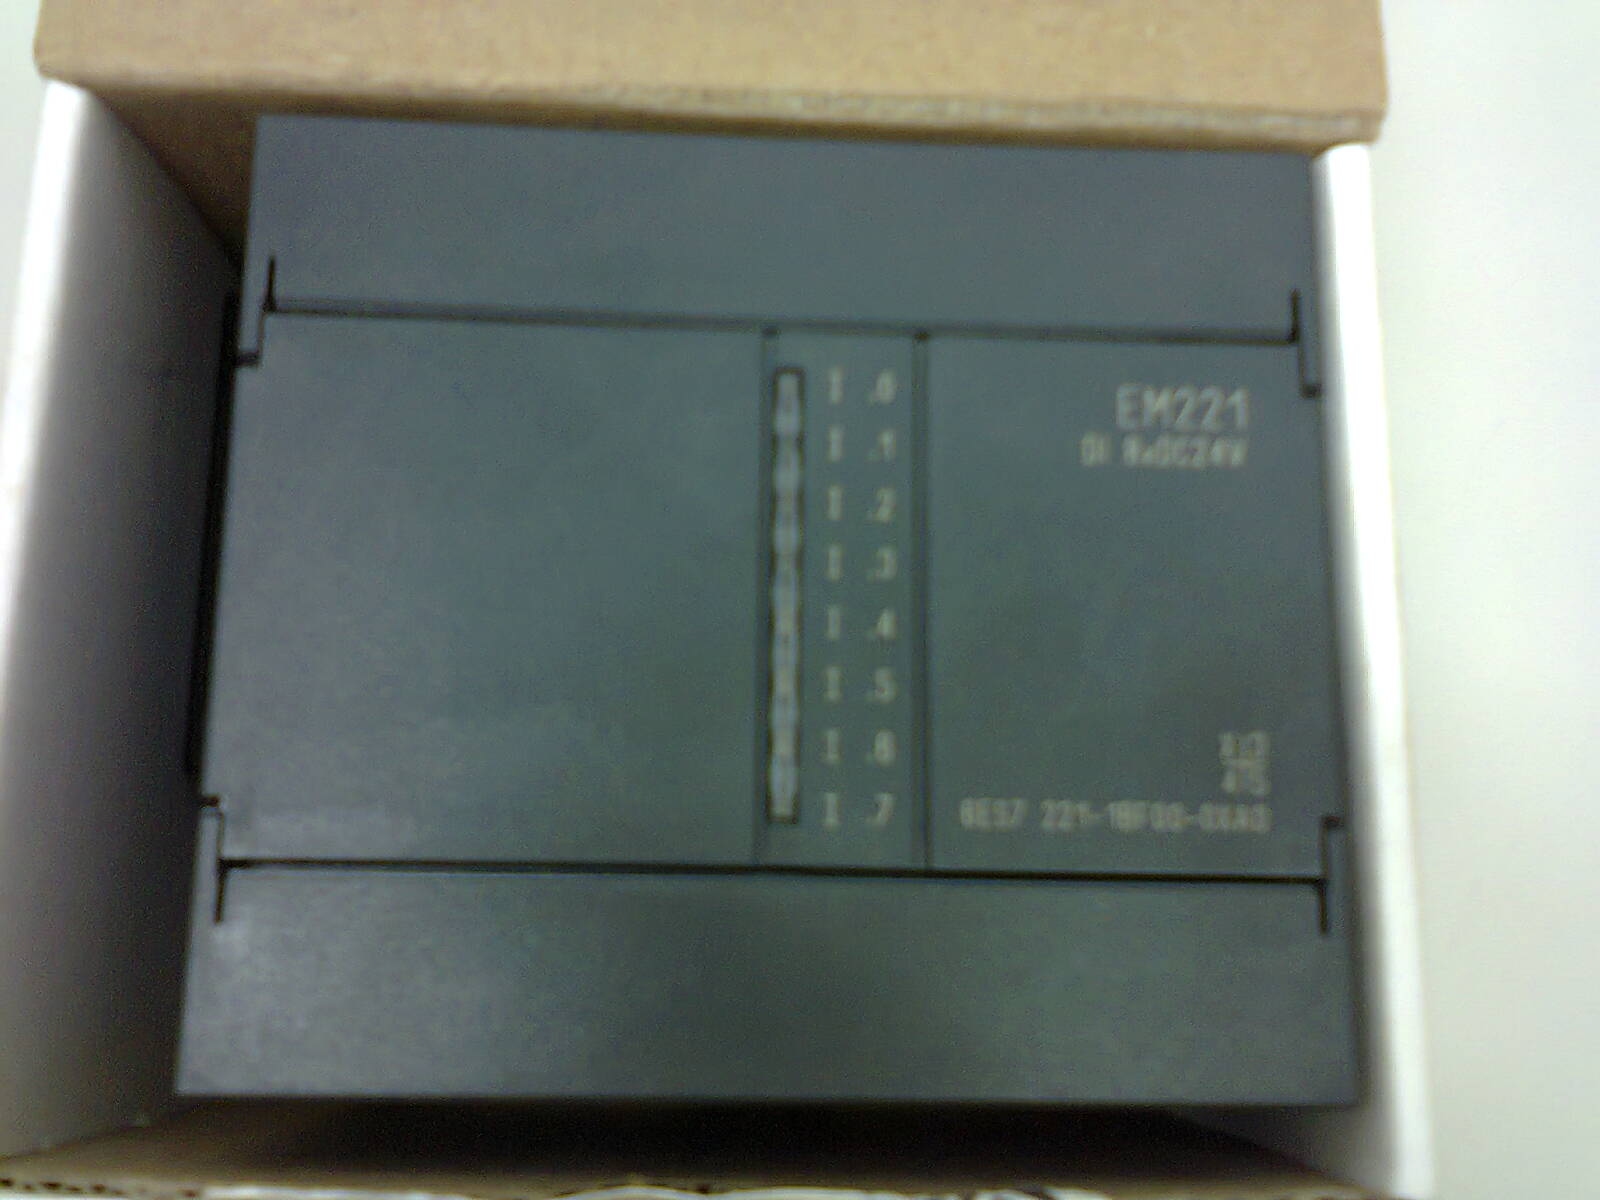 S7-200 EM221 Input module 24Vdc